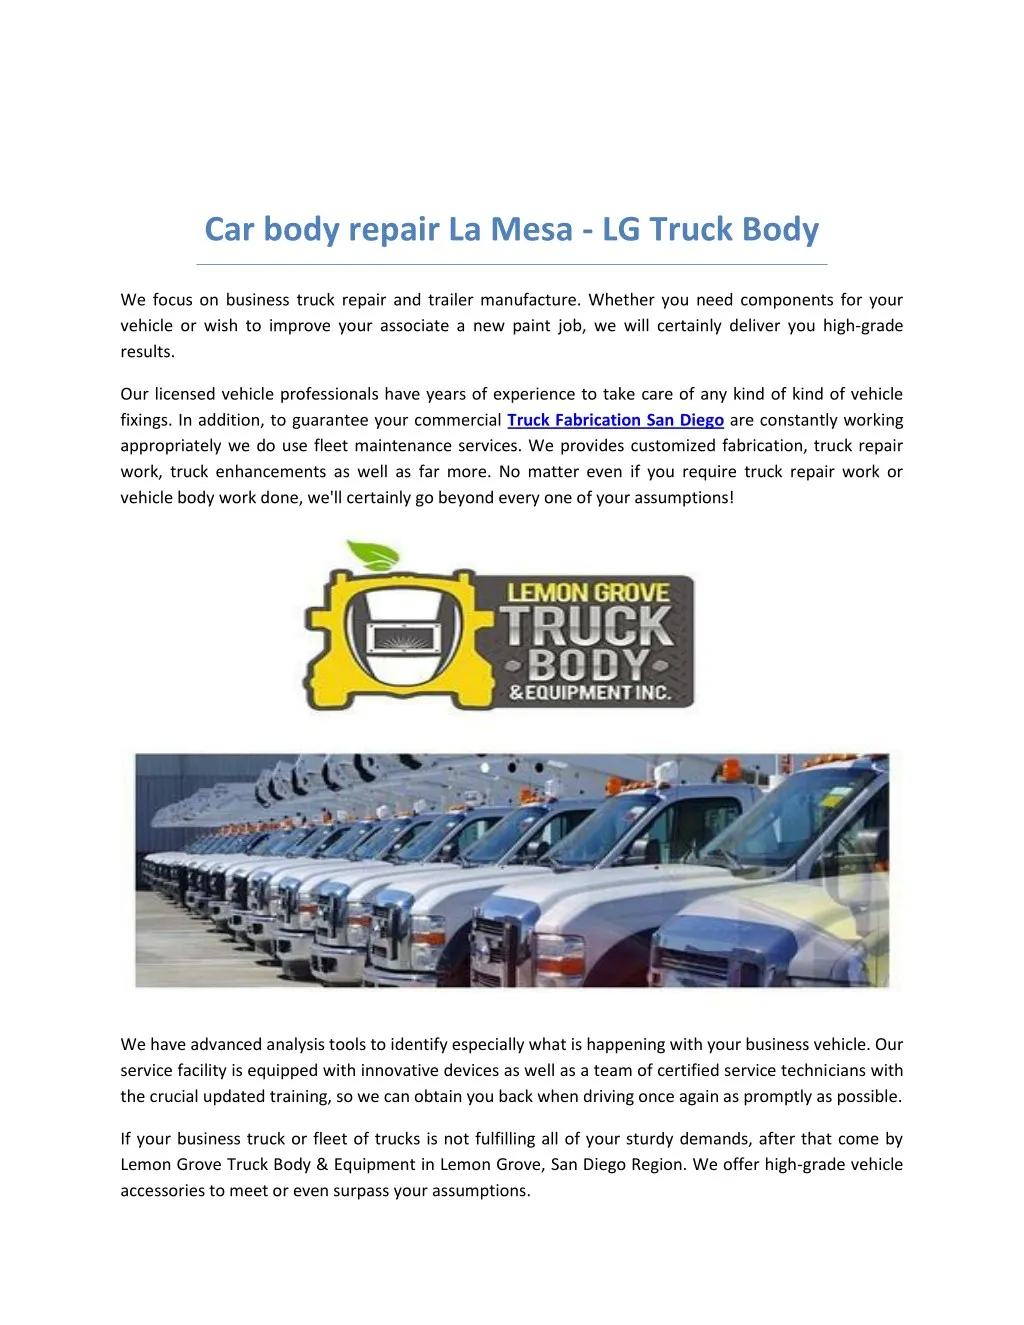 car body repair la mesa lg truck body